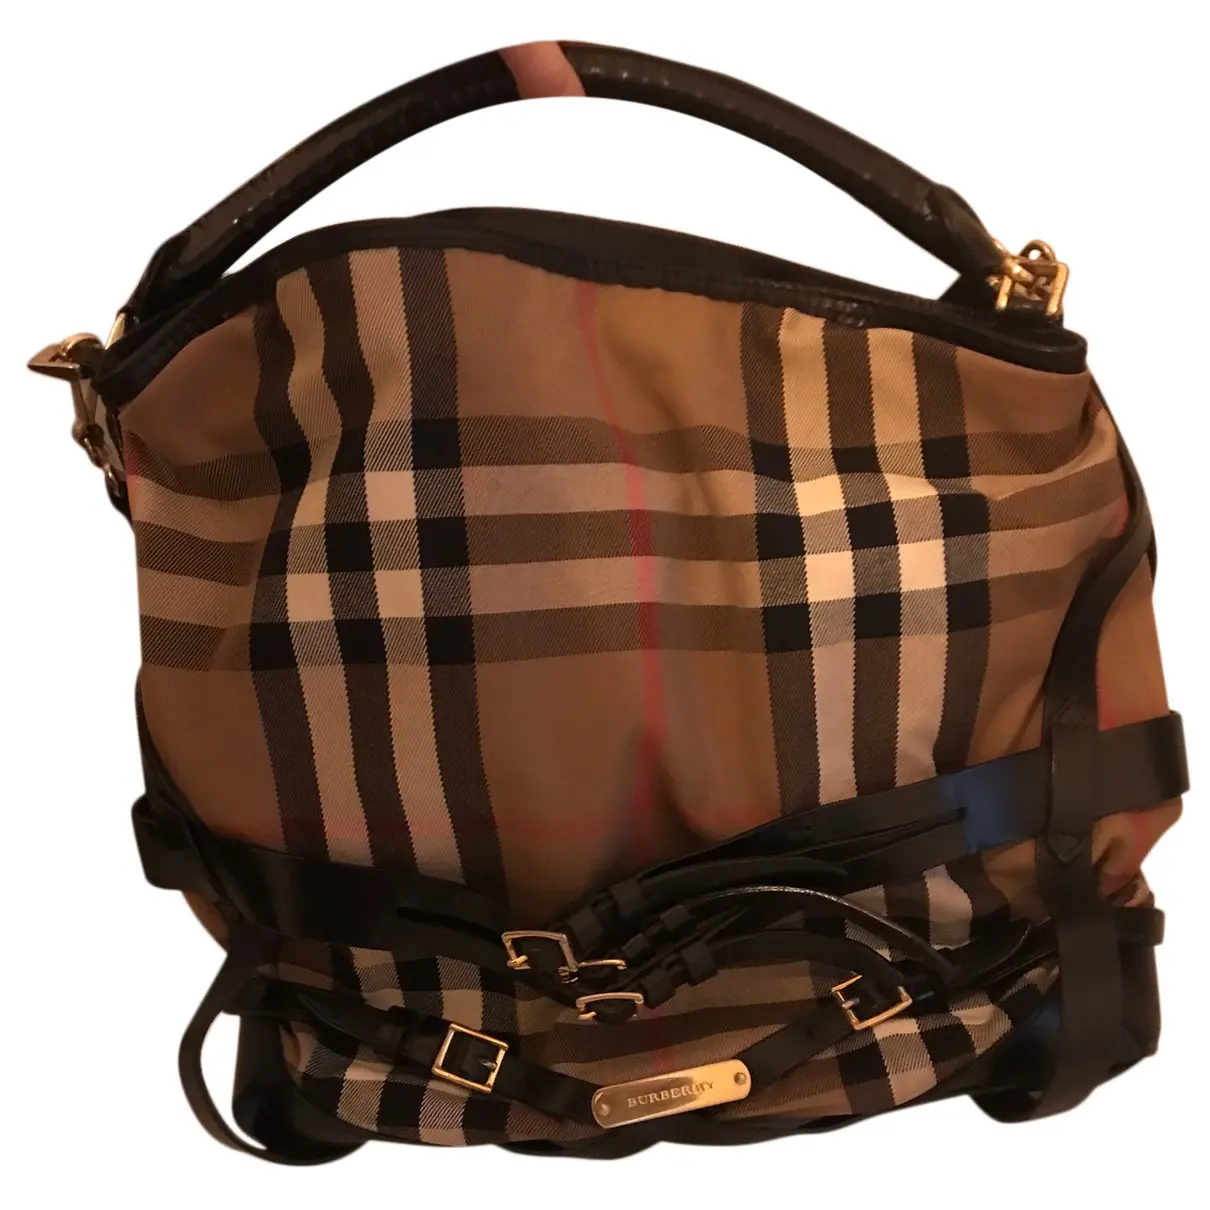 The Bucket cloth handbag Burberry